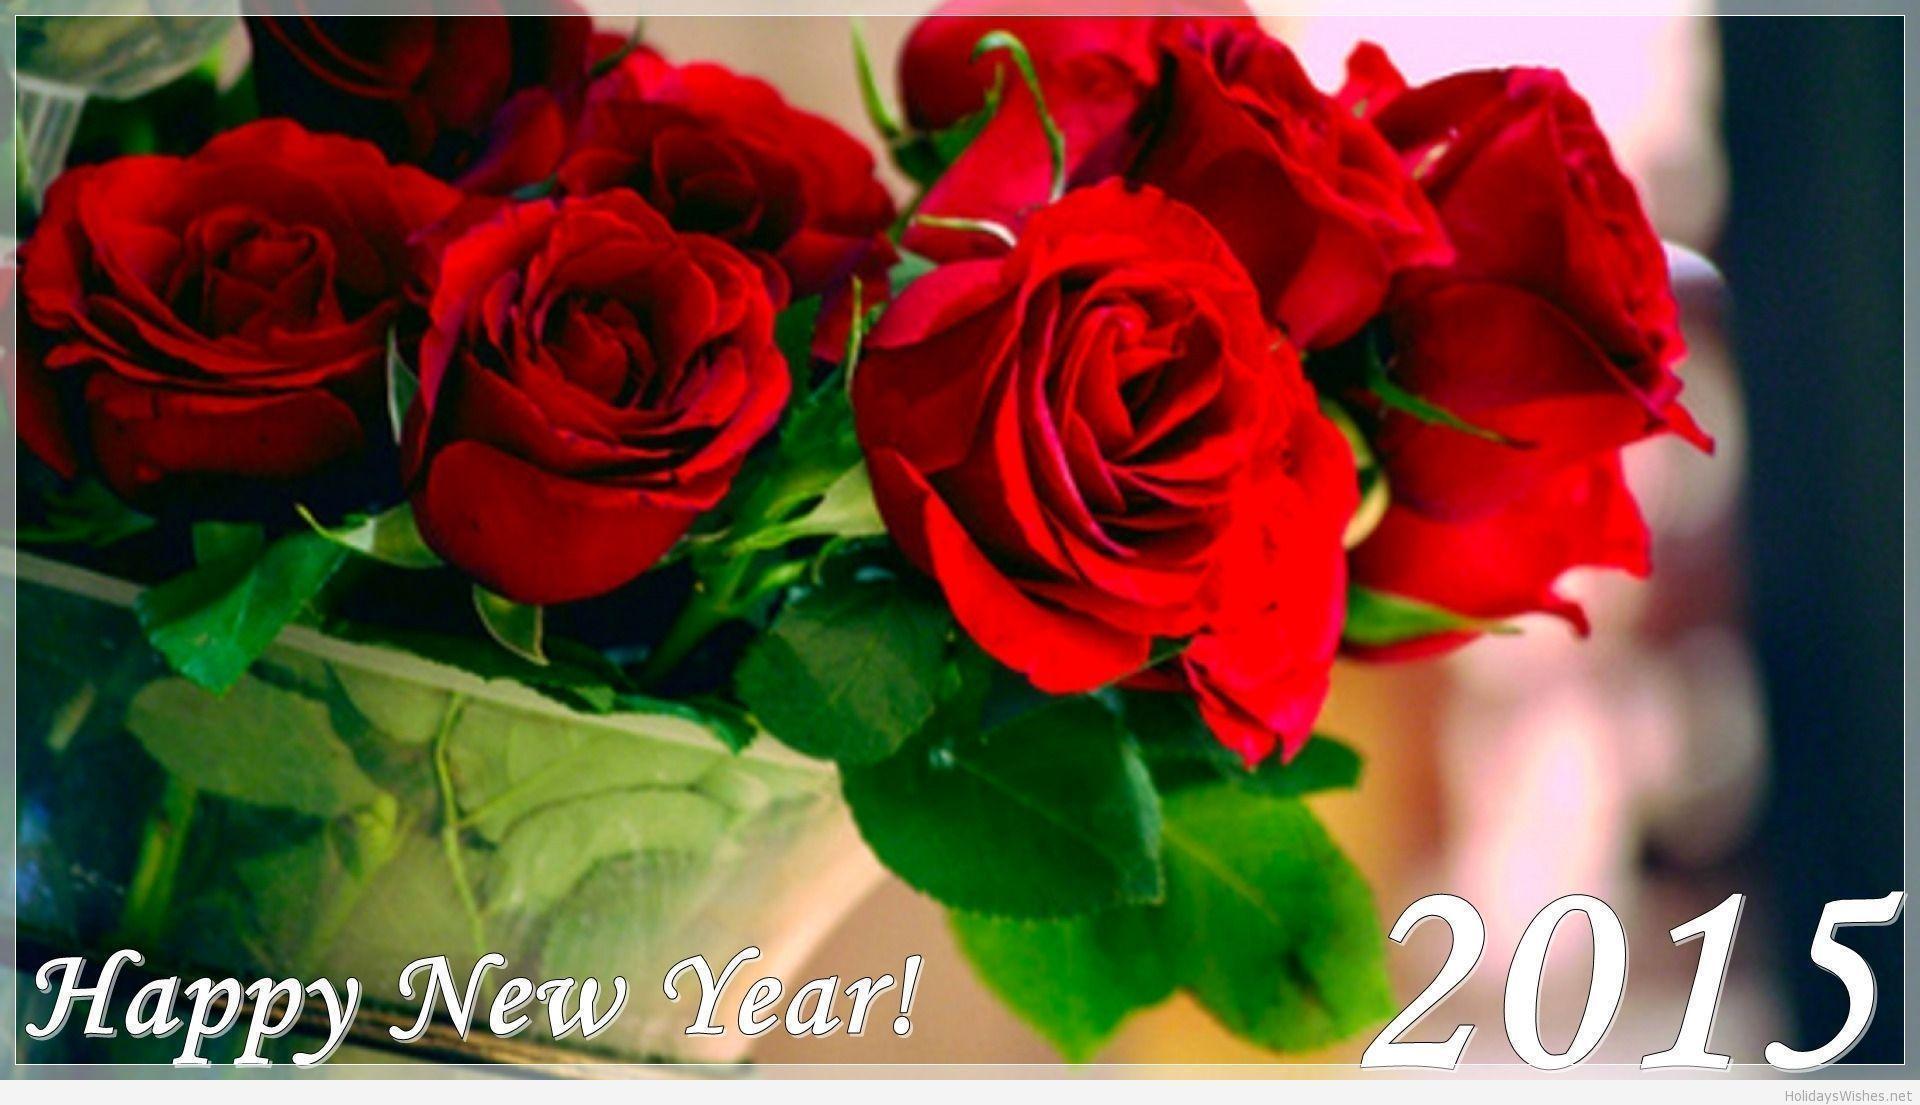 Wonderful Happy New Year roses wallpaper 2015